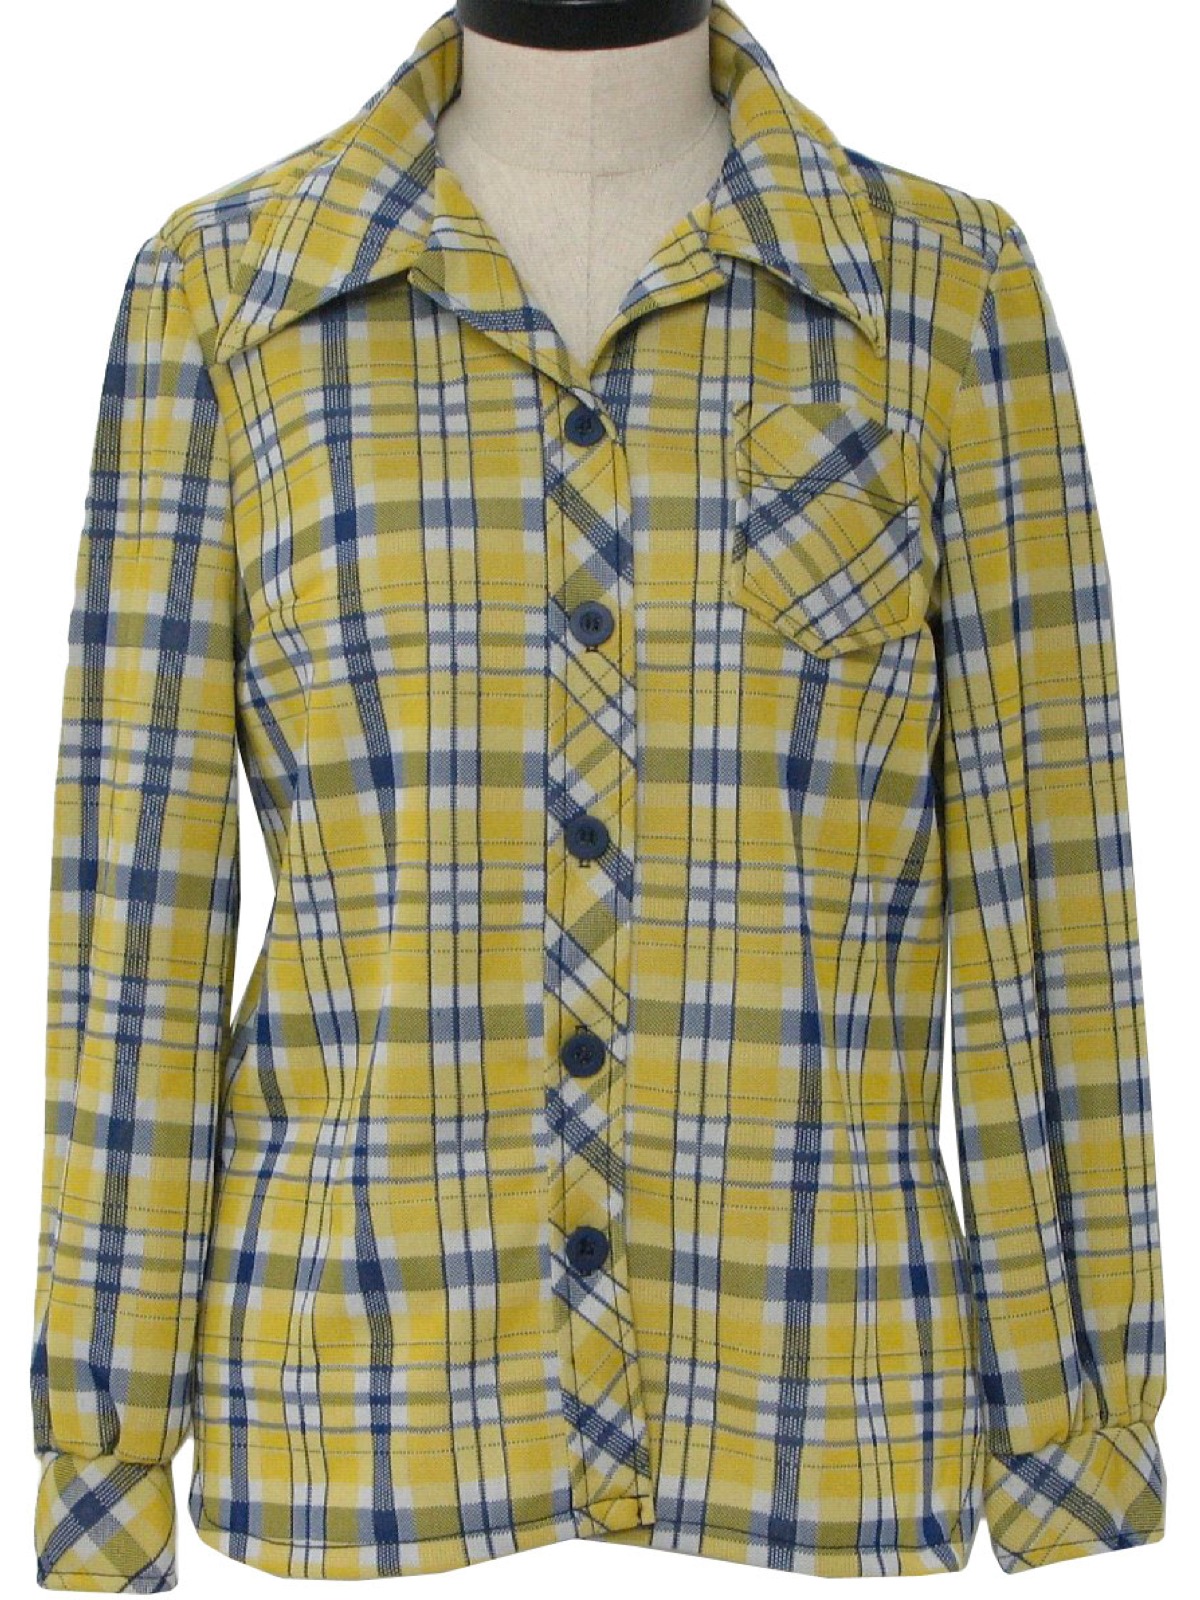 Retro 1970's Jacket (Stockton) : 70s -Stockton- Womens yellow, off ...